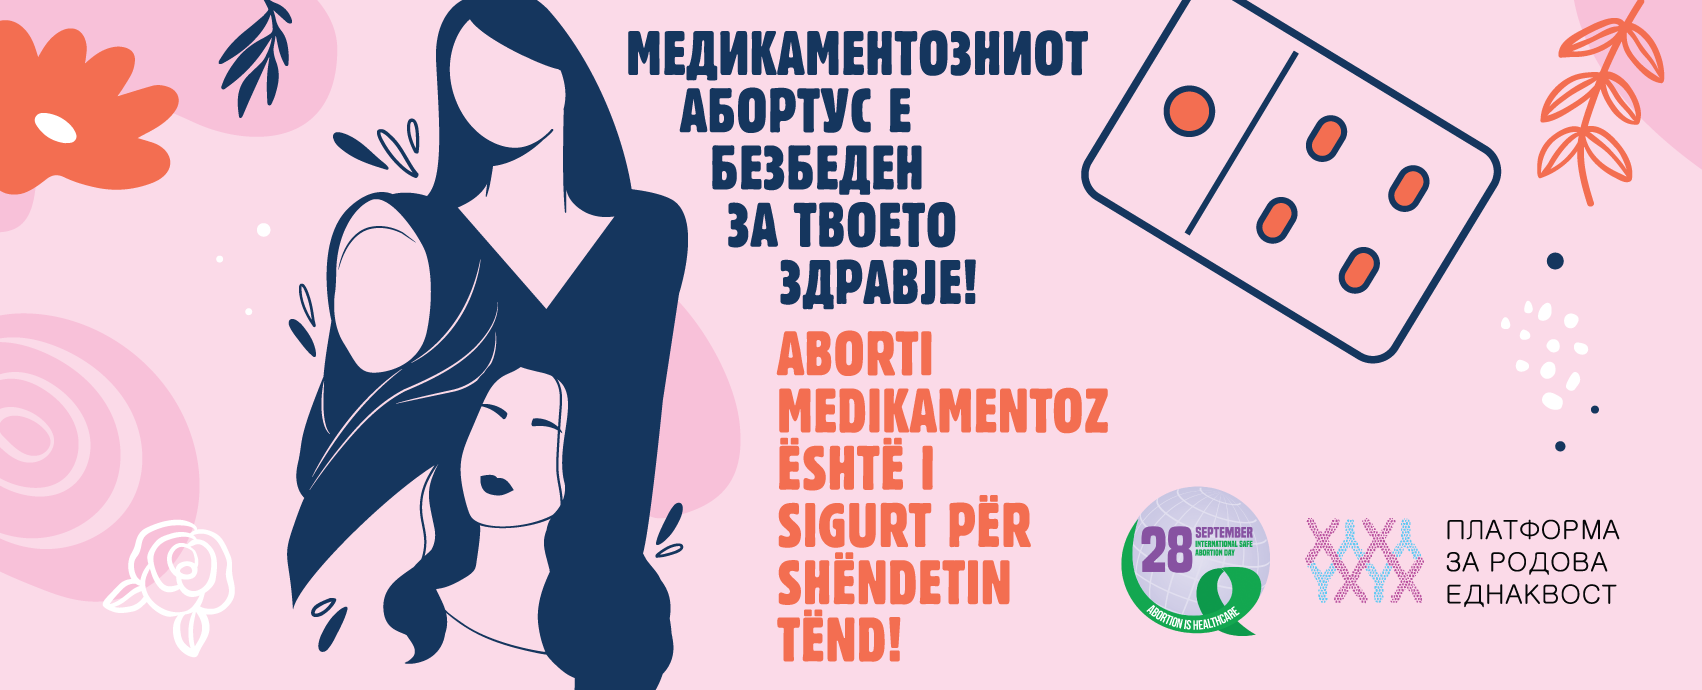 Gender Equality Platform: Safe abortion constitutes a primary healthcare concern – full stop!